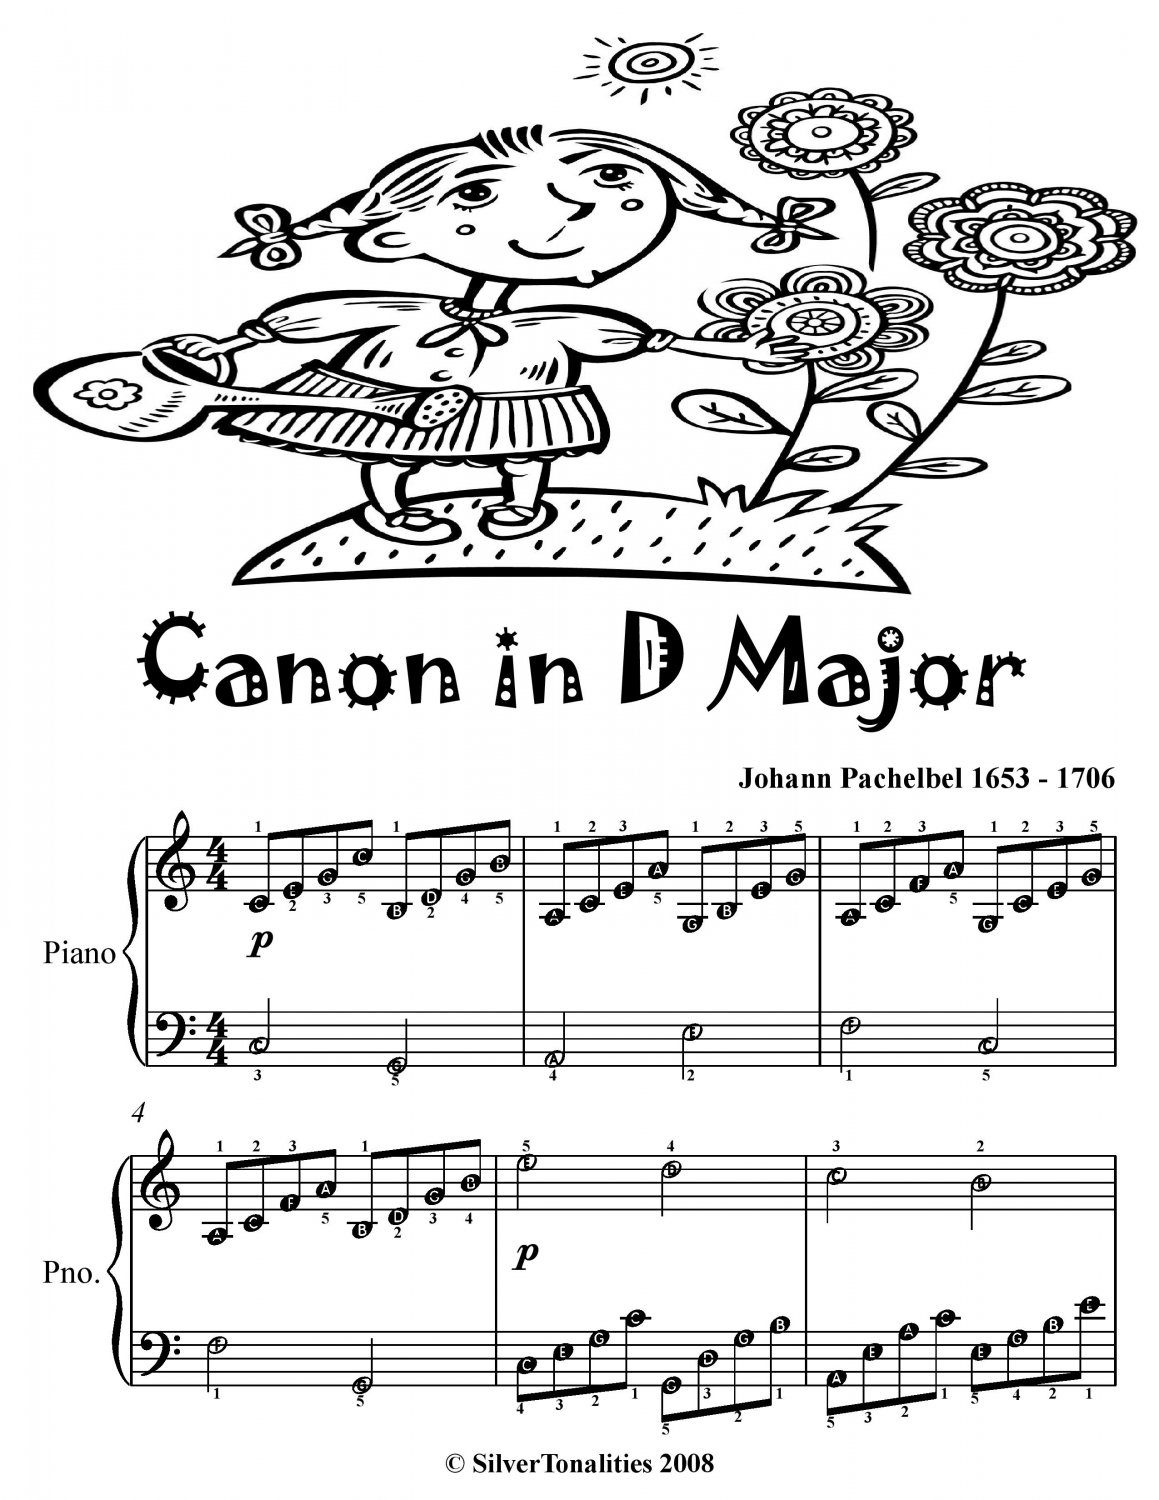 Canon in D Major Easy Piano Sheet Music Tadpole Edition PDF